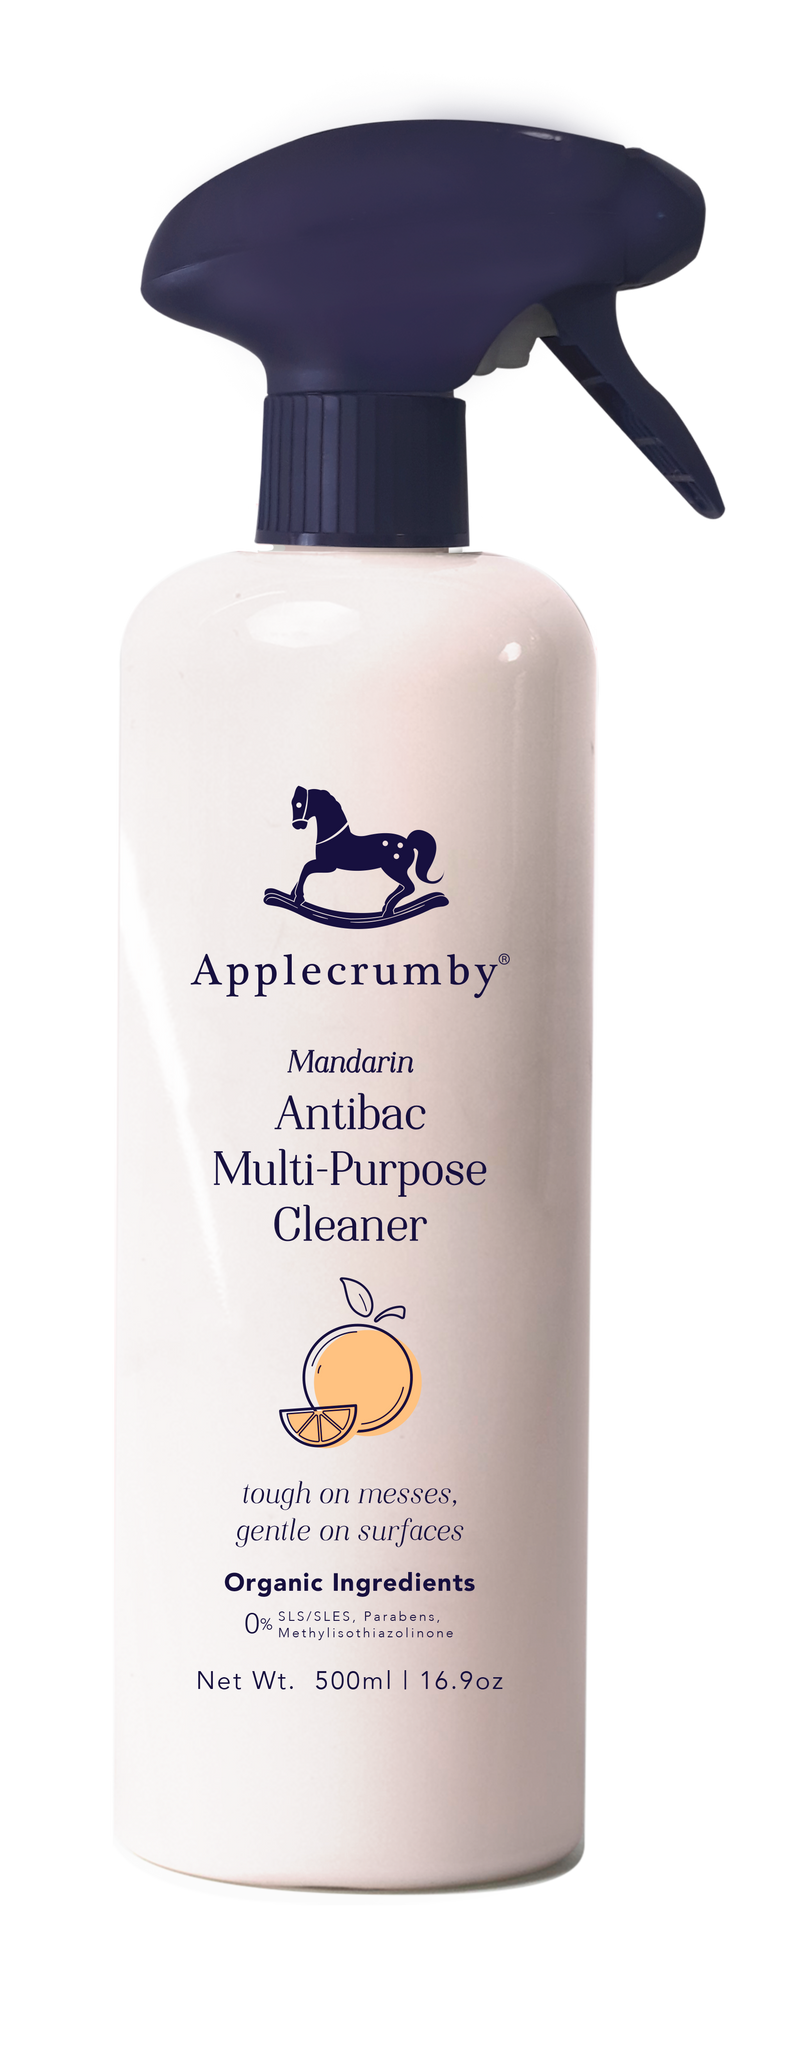 Applecrumby Antibac Multi-Purpose Cleaner 500ml - Mandarin